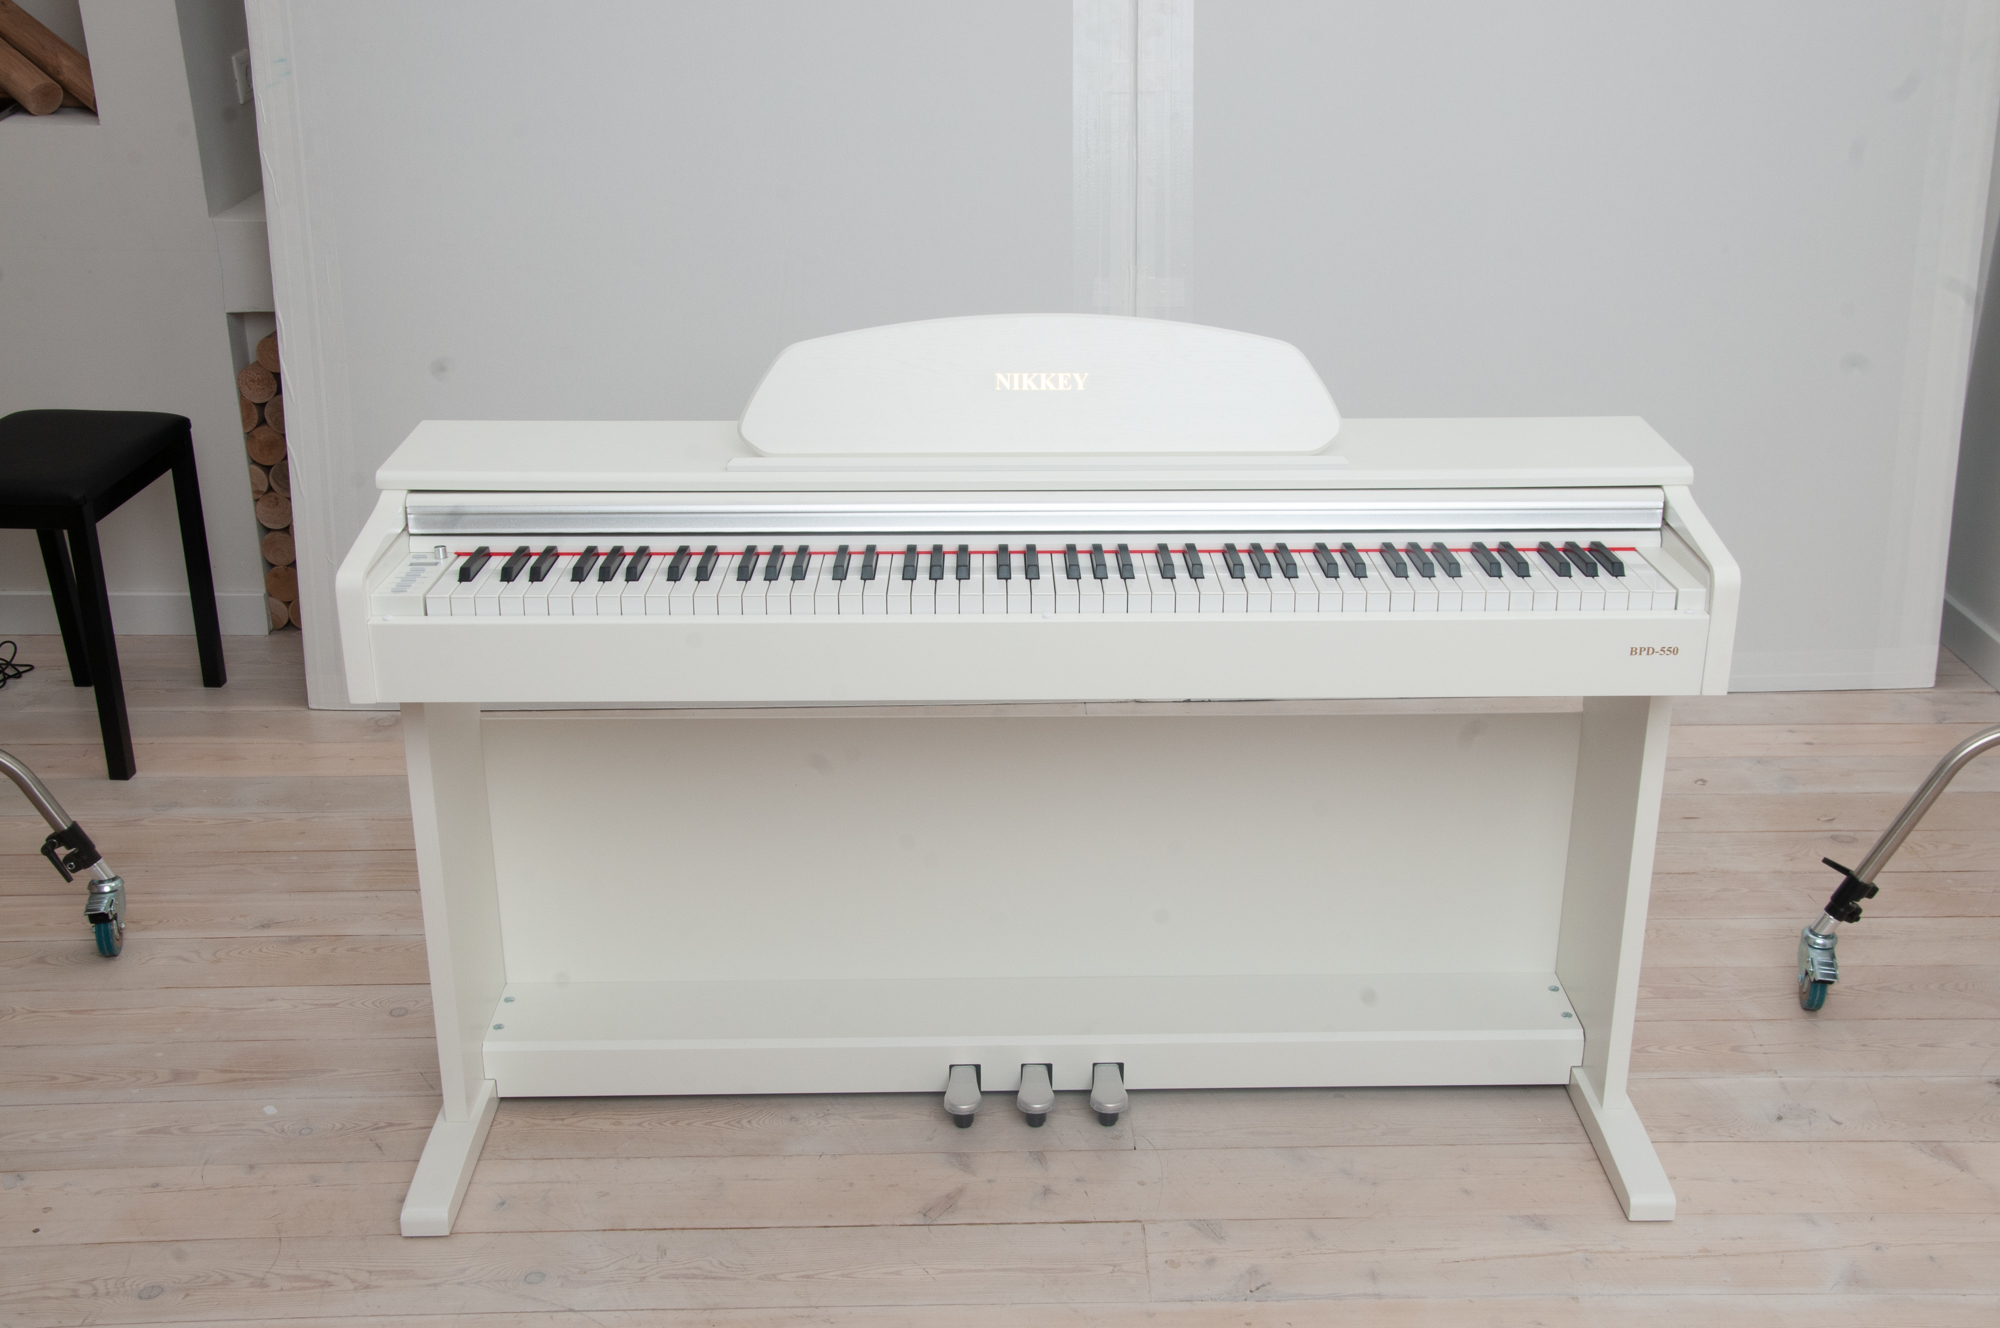 NIKKEY BPD-550 WH - Цифровое пианино, белое